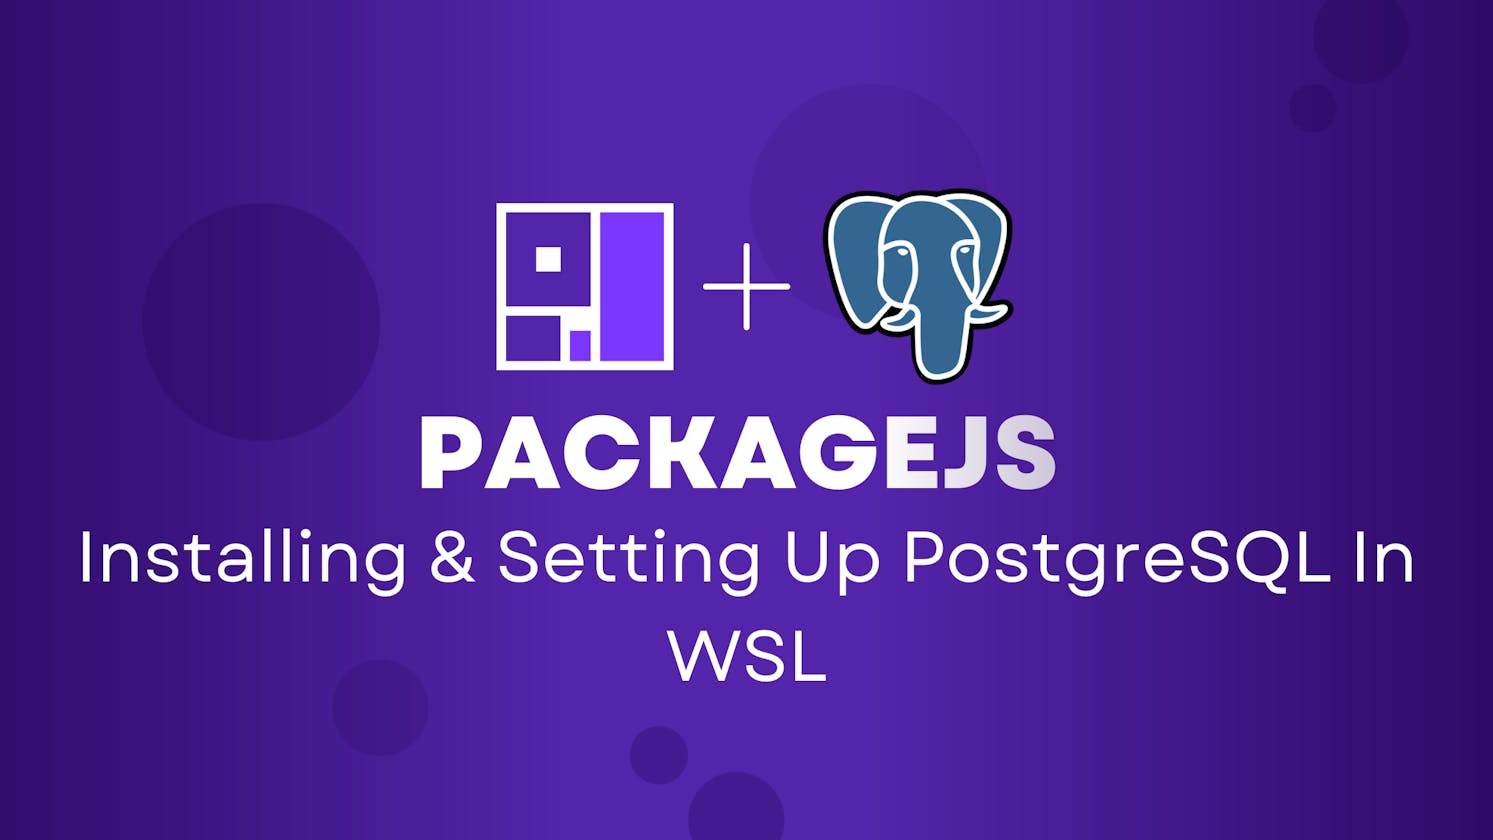 PACKAGEJS: Installing & Setting Up PostgreSQL In WSL